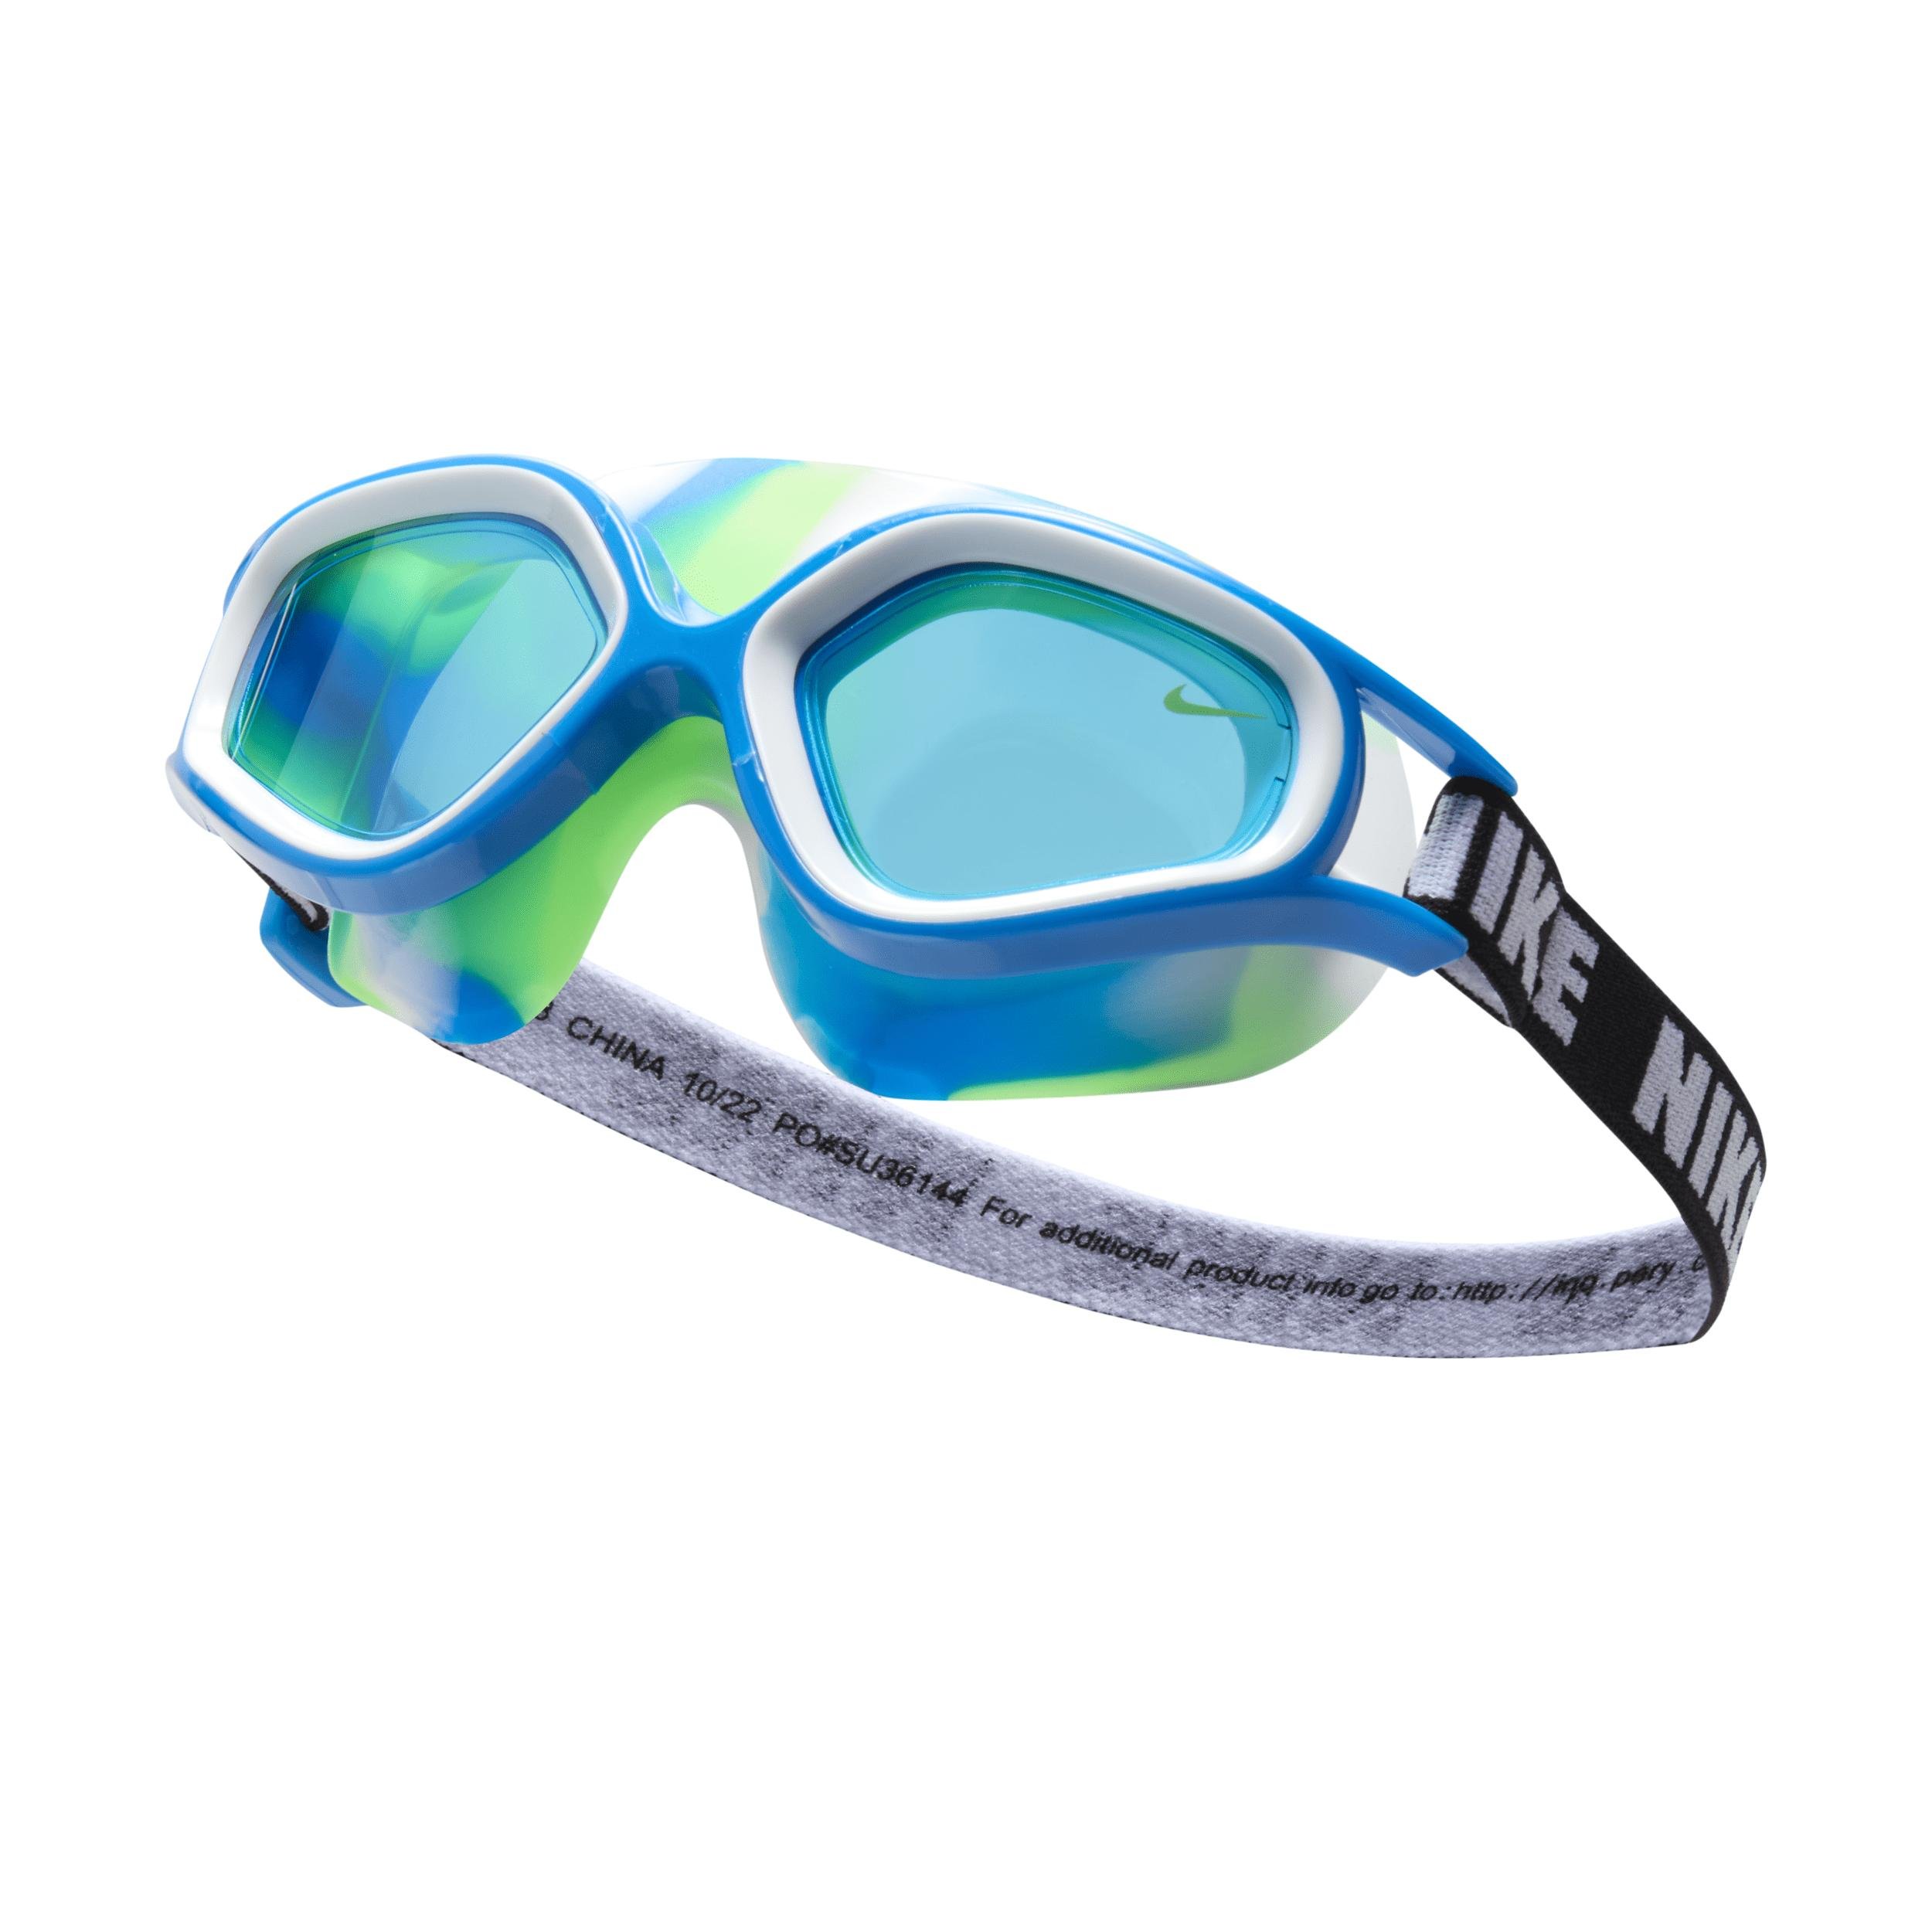 Nike Swim Expanse Little Kids' Mask Goggles by NIKE